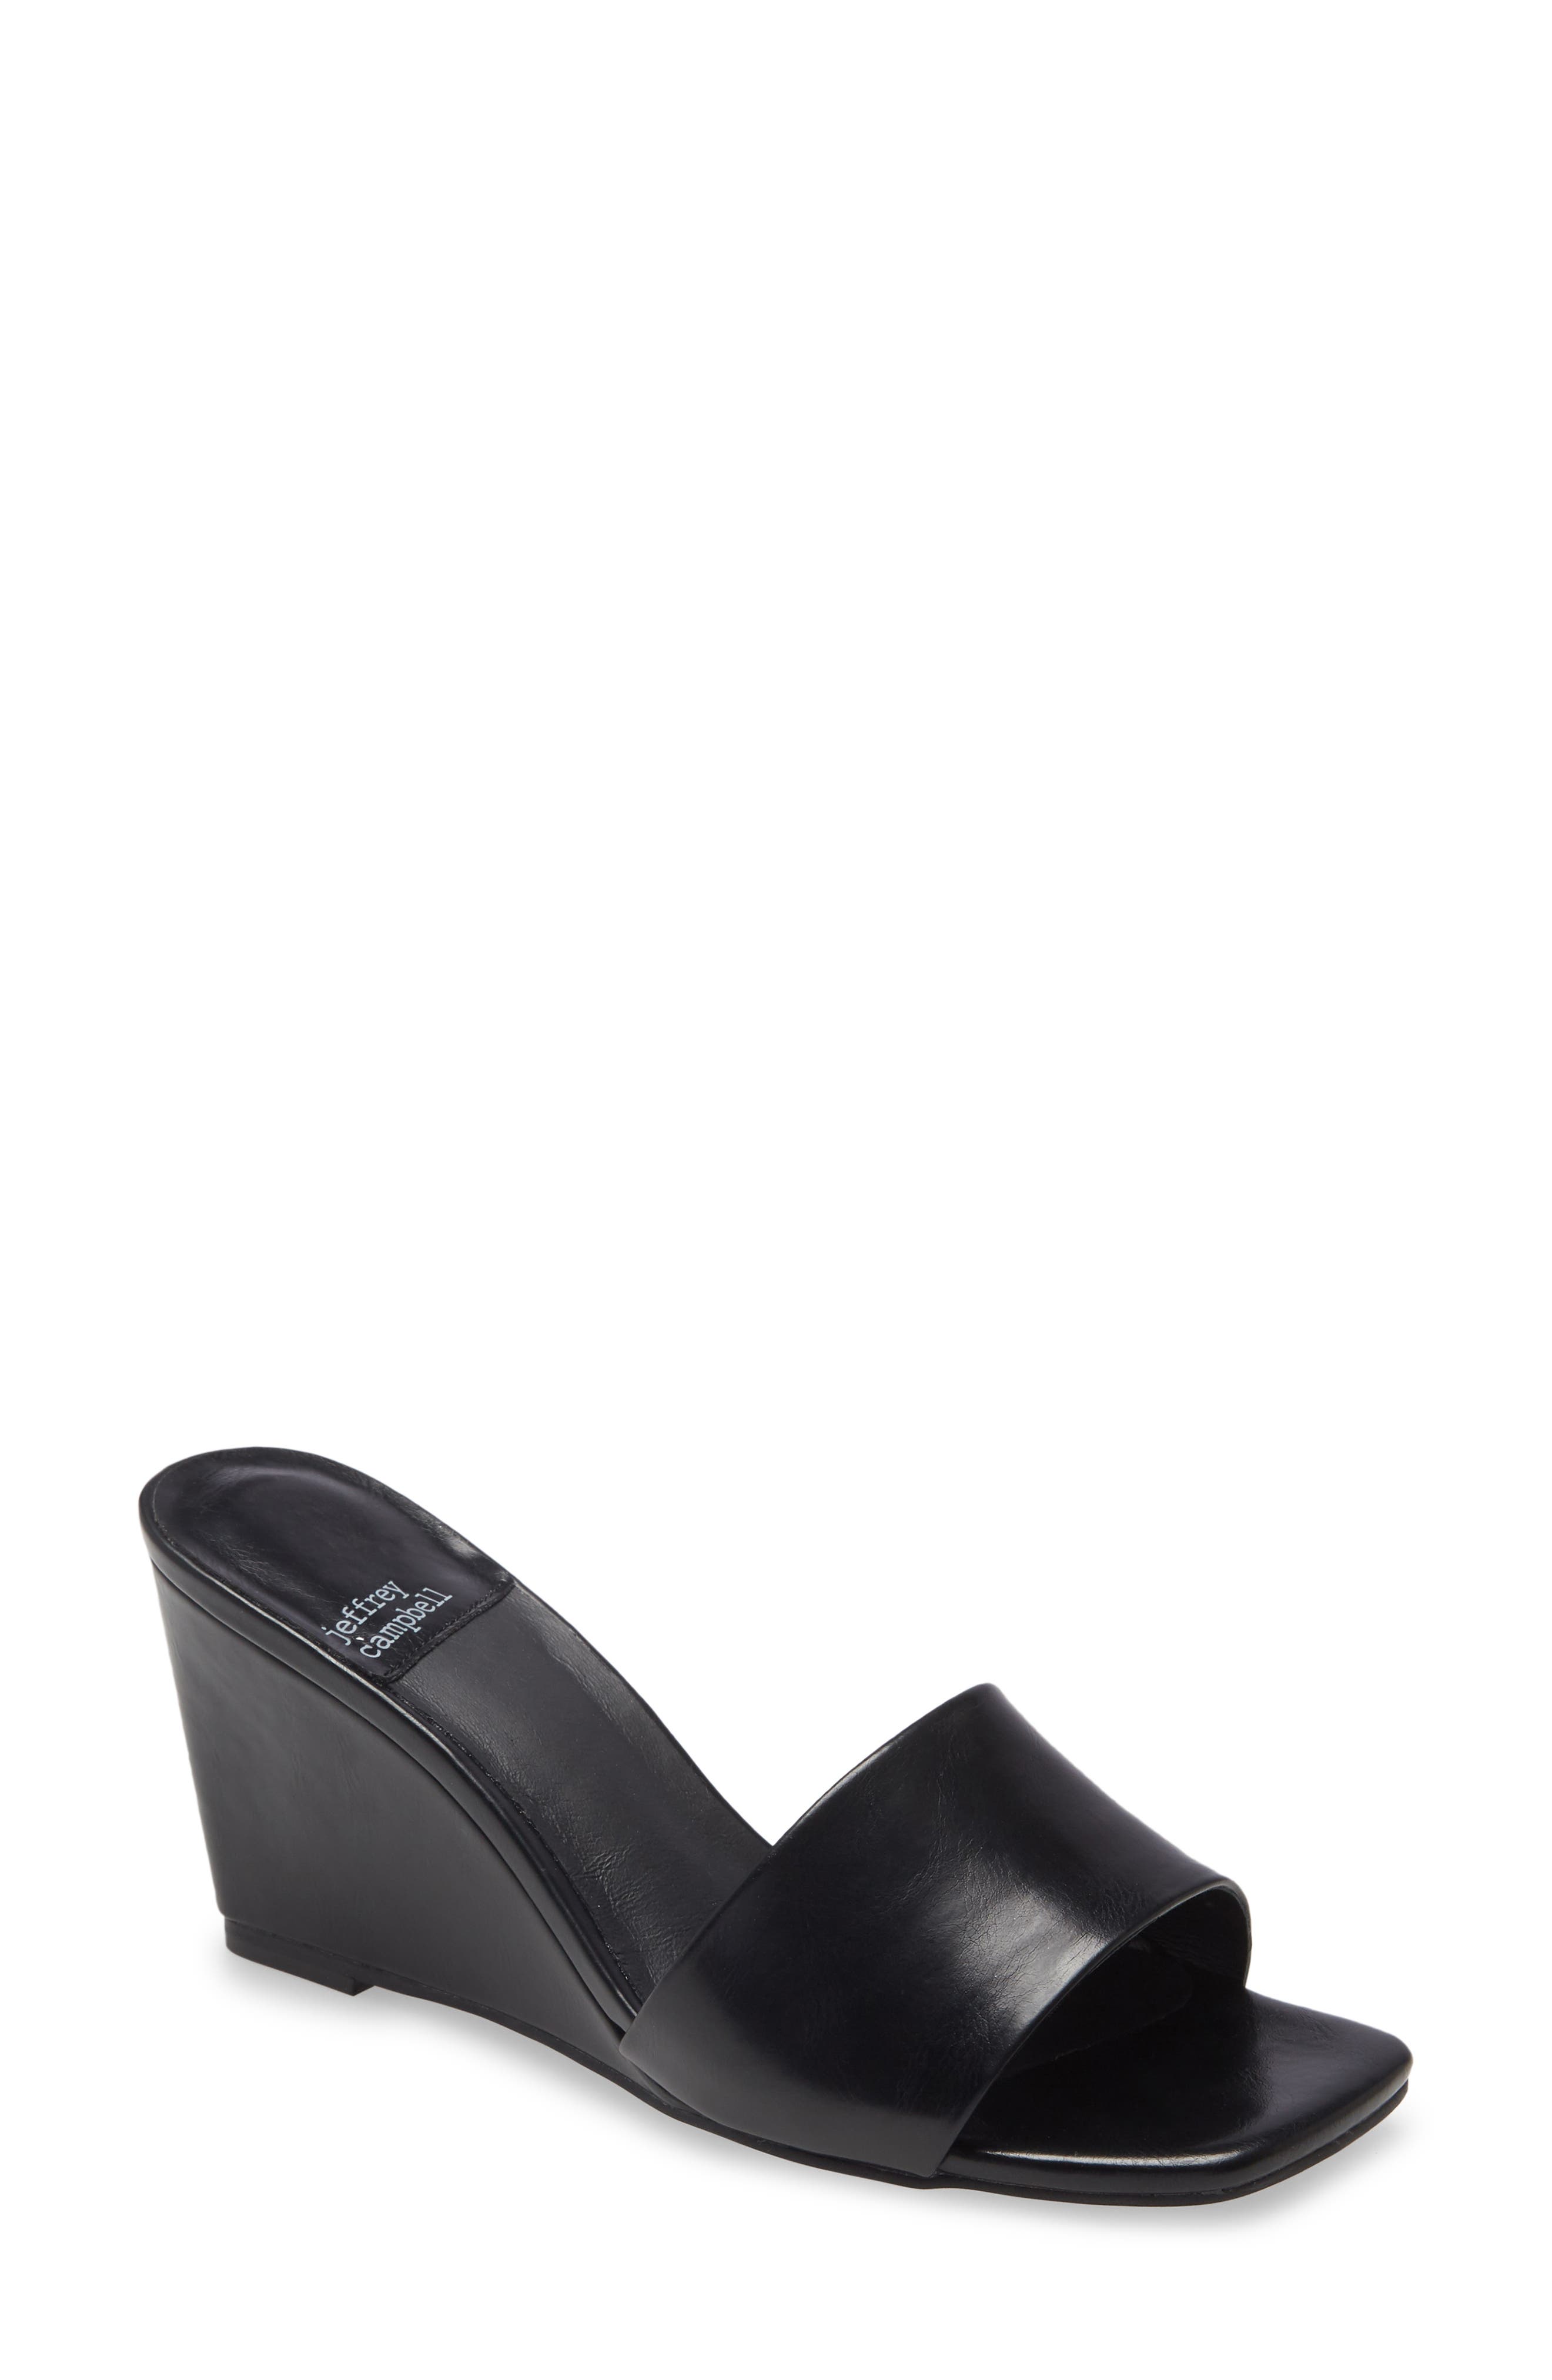 Nordstrom Women Shoes High Heels Wedges Wedge Sandals Bono 290 Wedge Sandal in Black Verona Leather at Nordstrom 